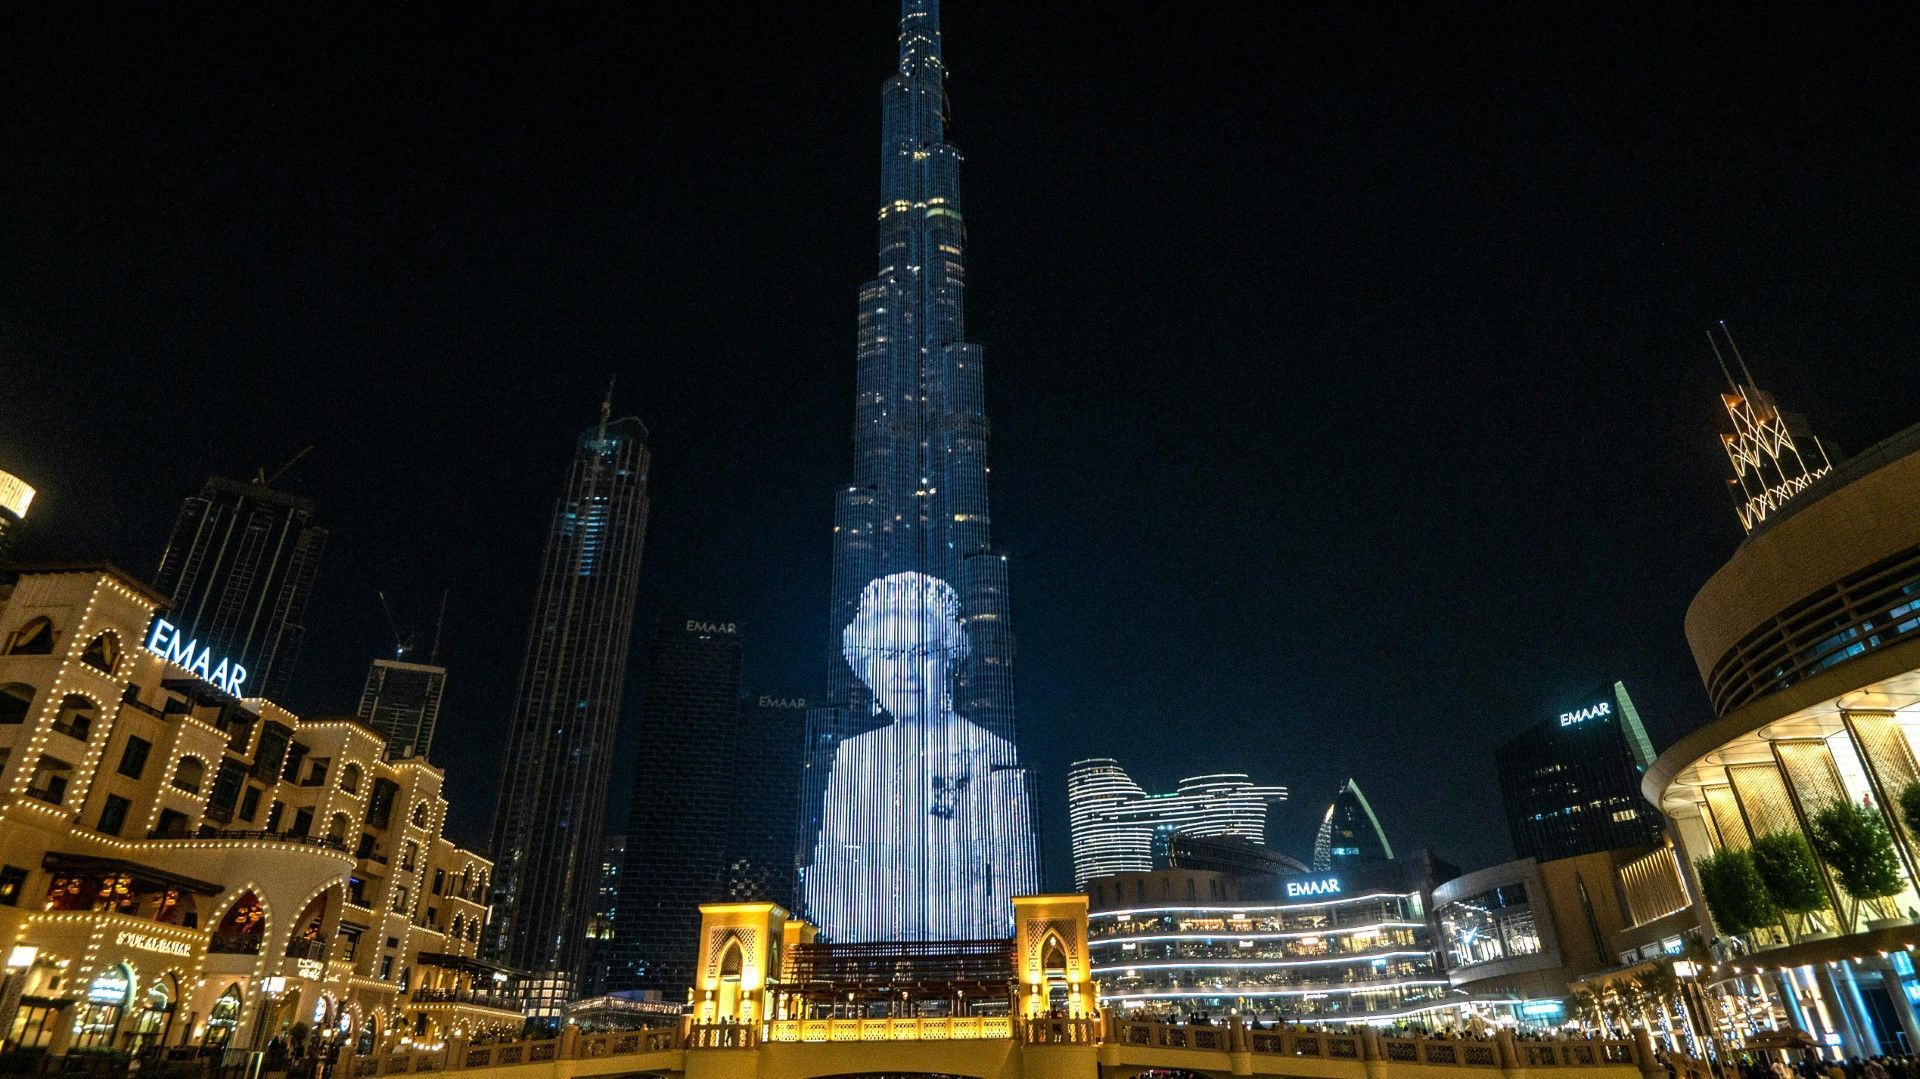 Burj Khalifa in Dubai illuminated with likeness of the Queen